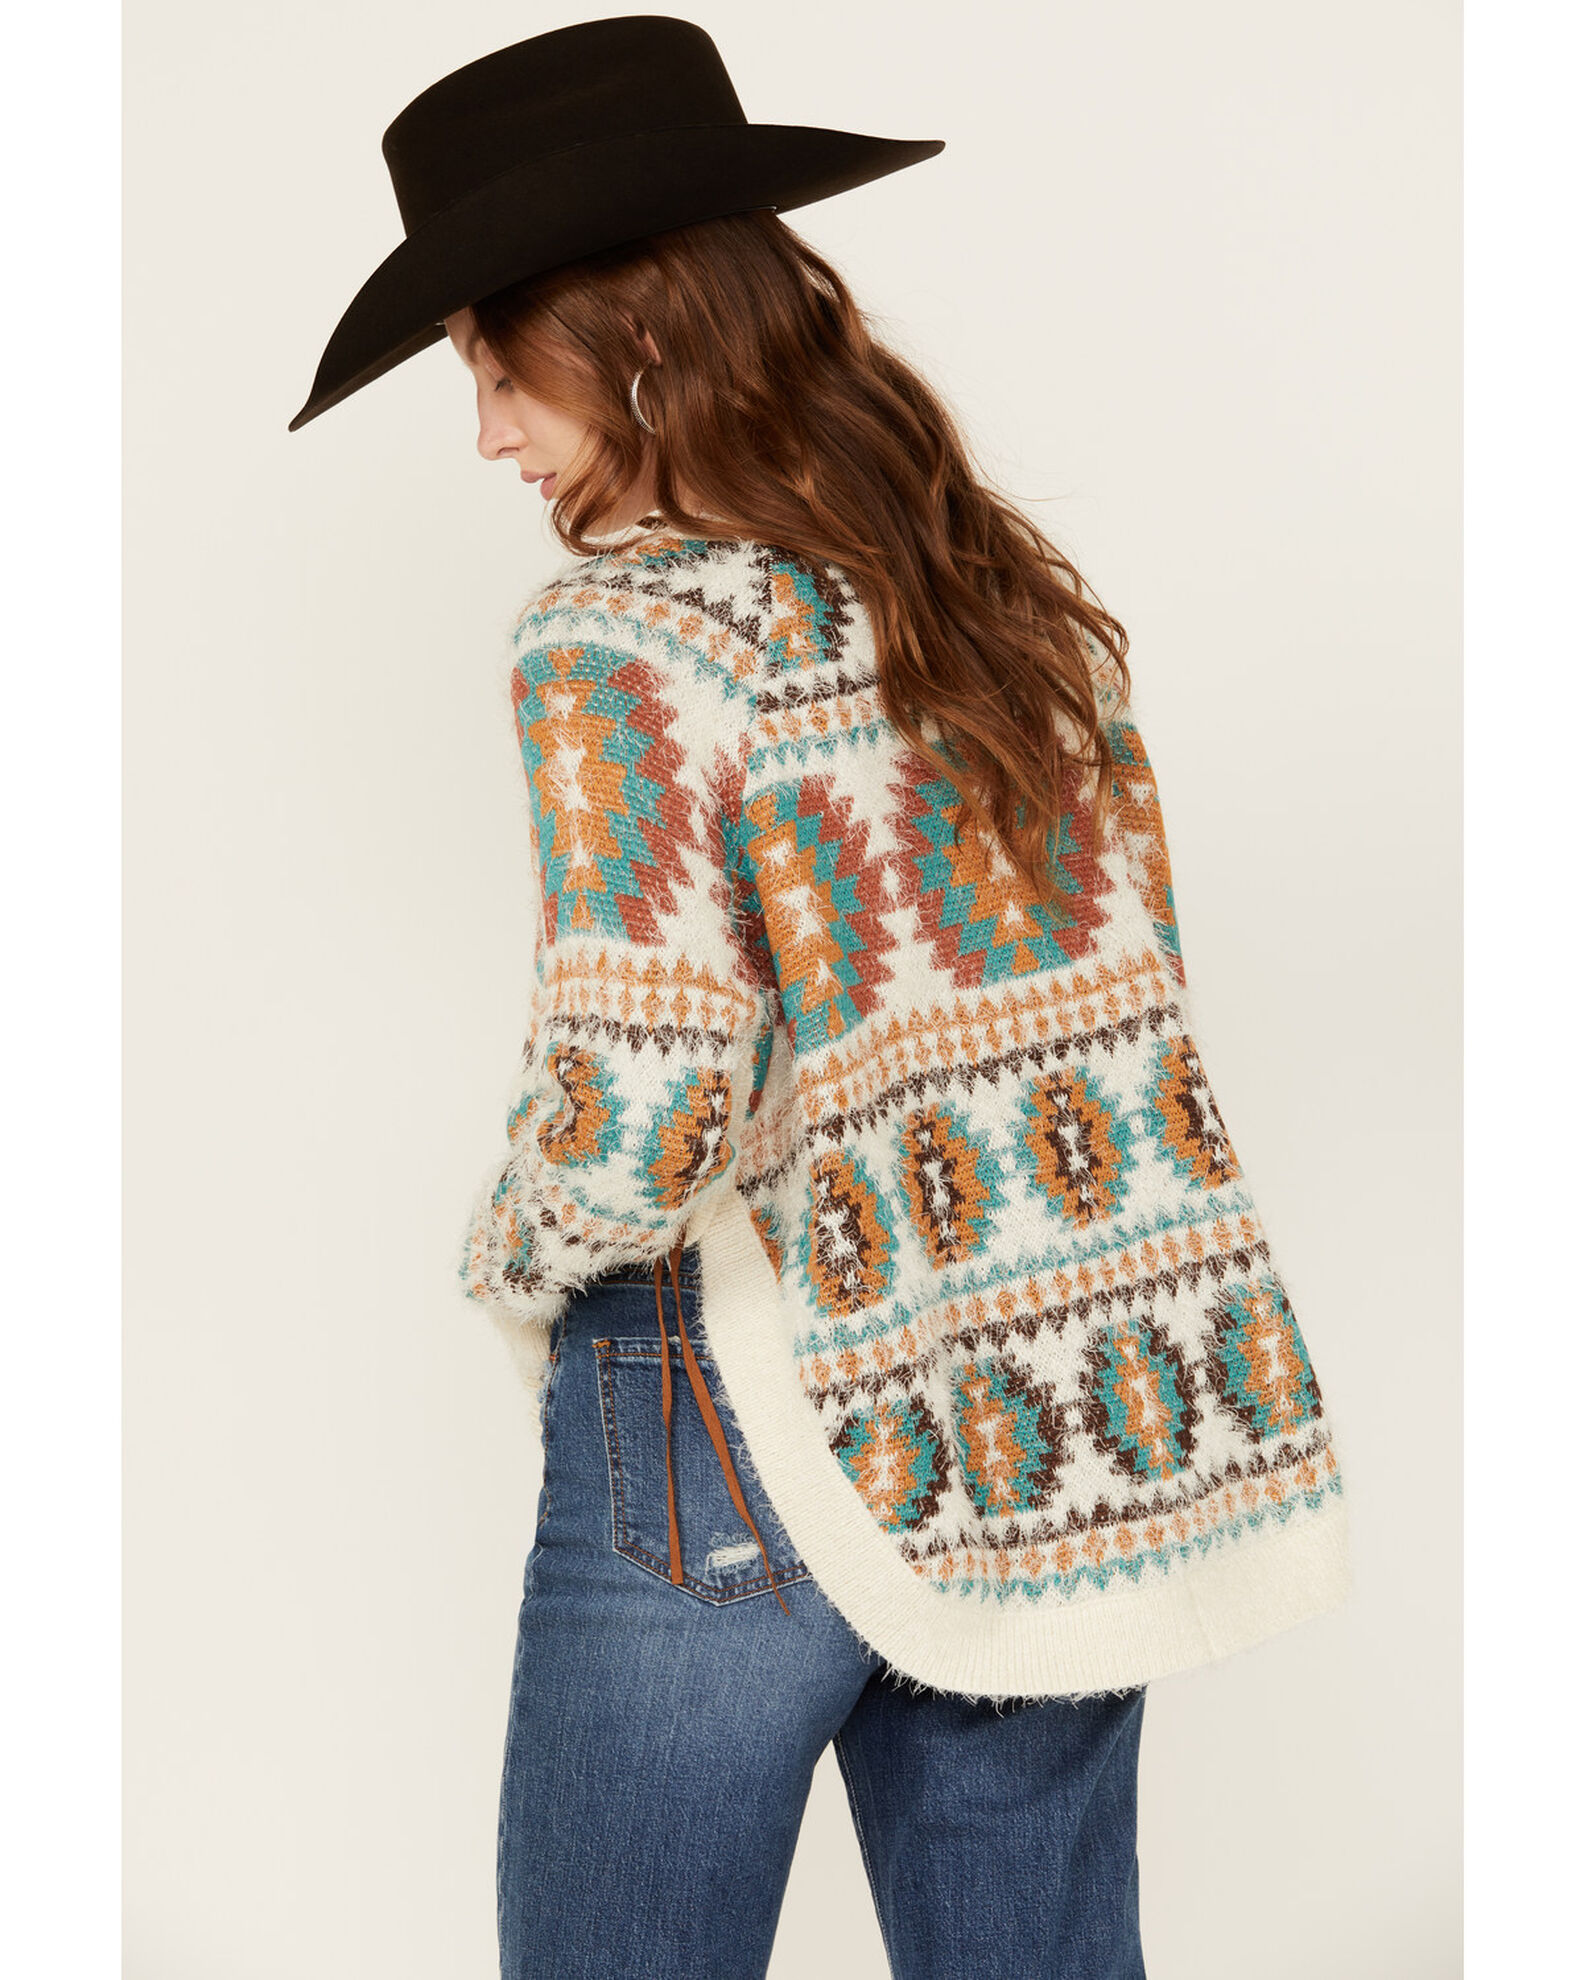 Cotton & Rye Women's Southwestern Print Eyelash Round Bottom Sweater